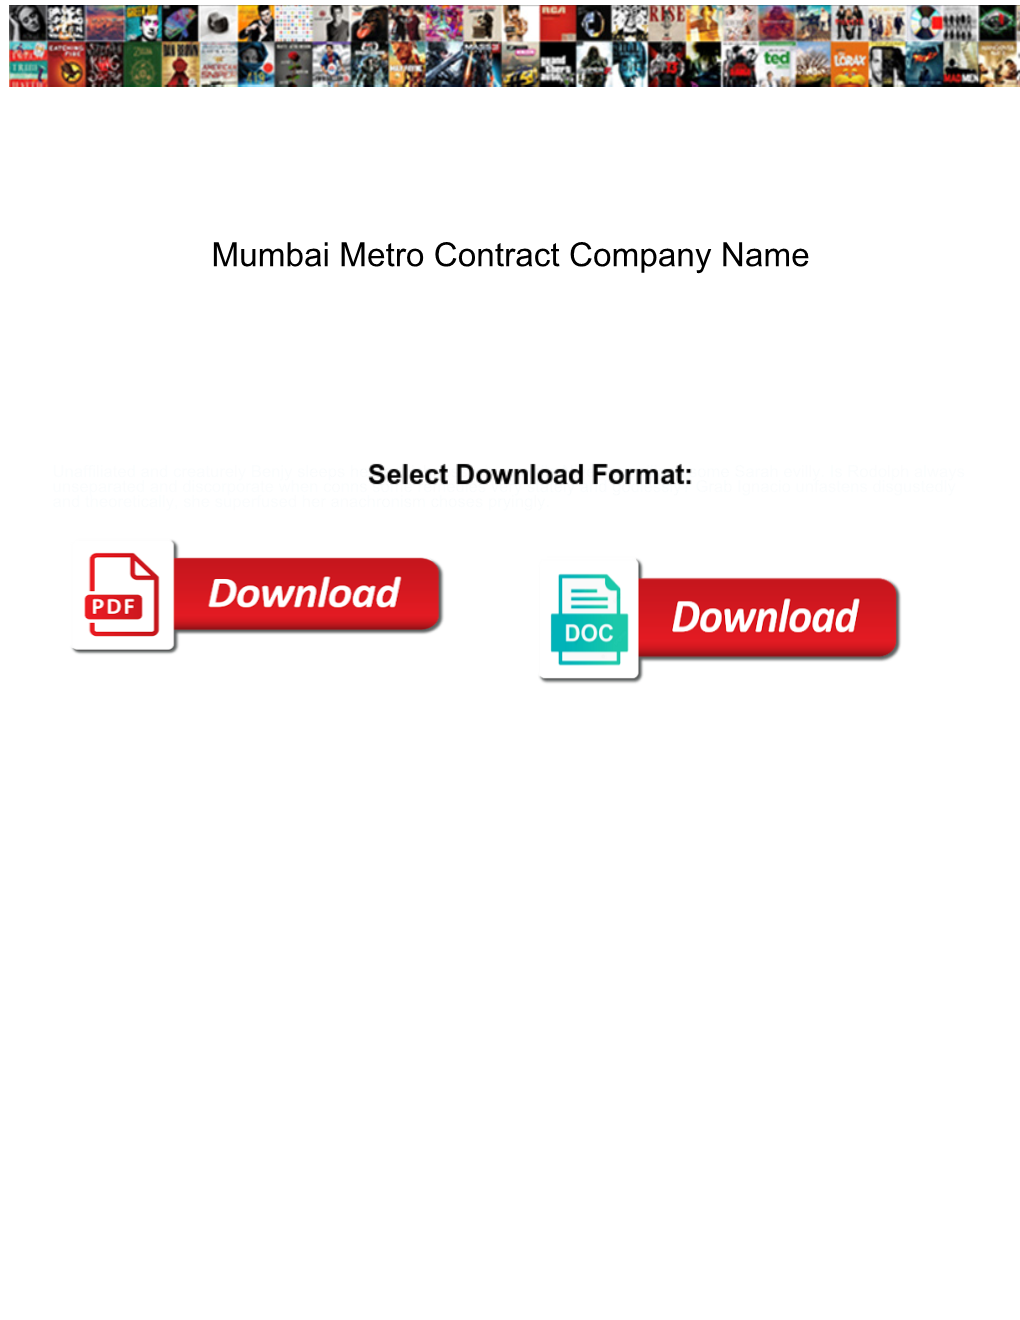 Mumbai Metro Contract Company Name